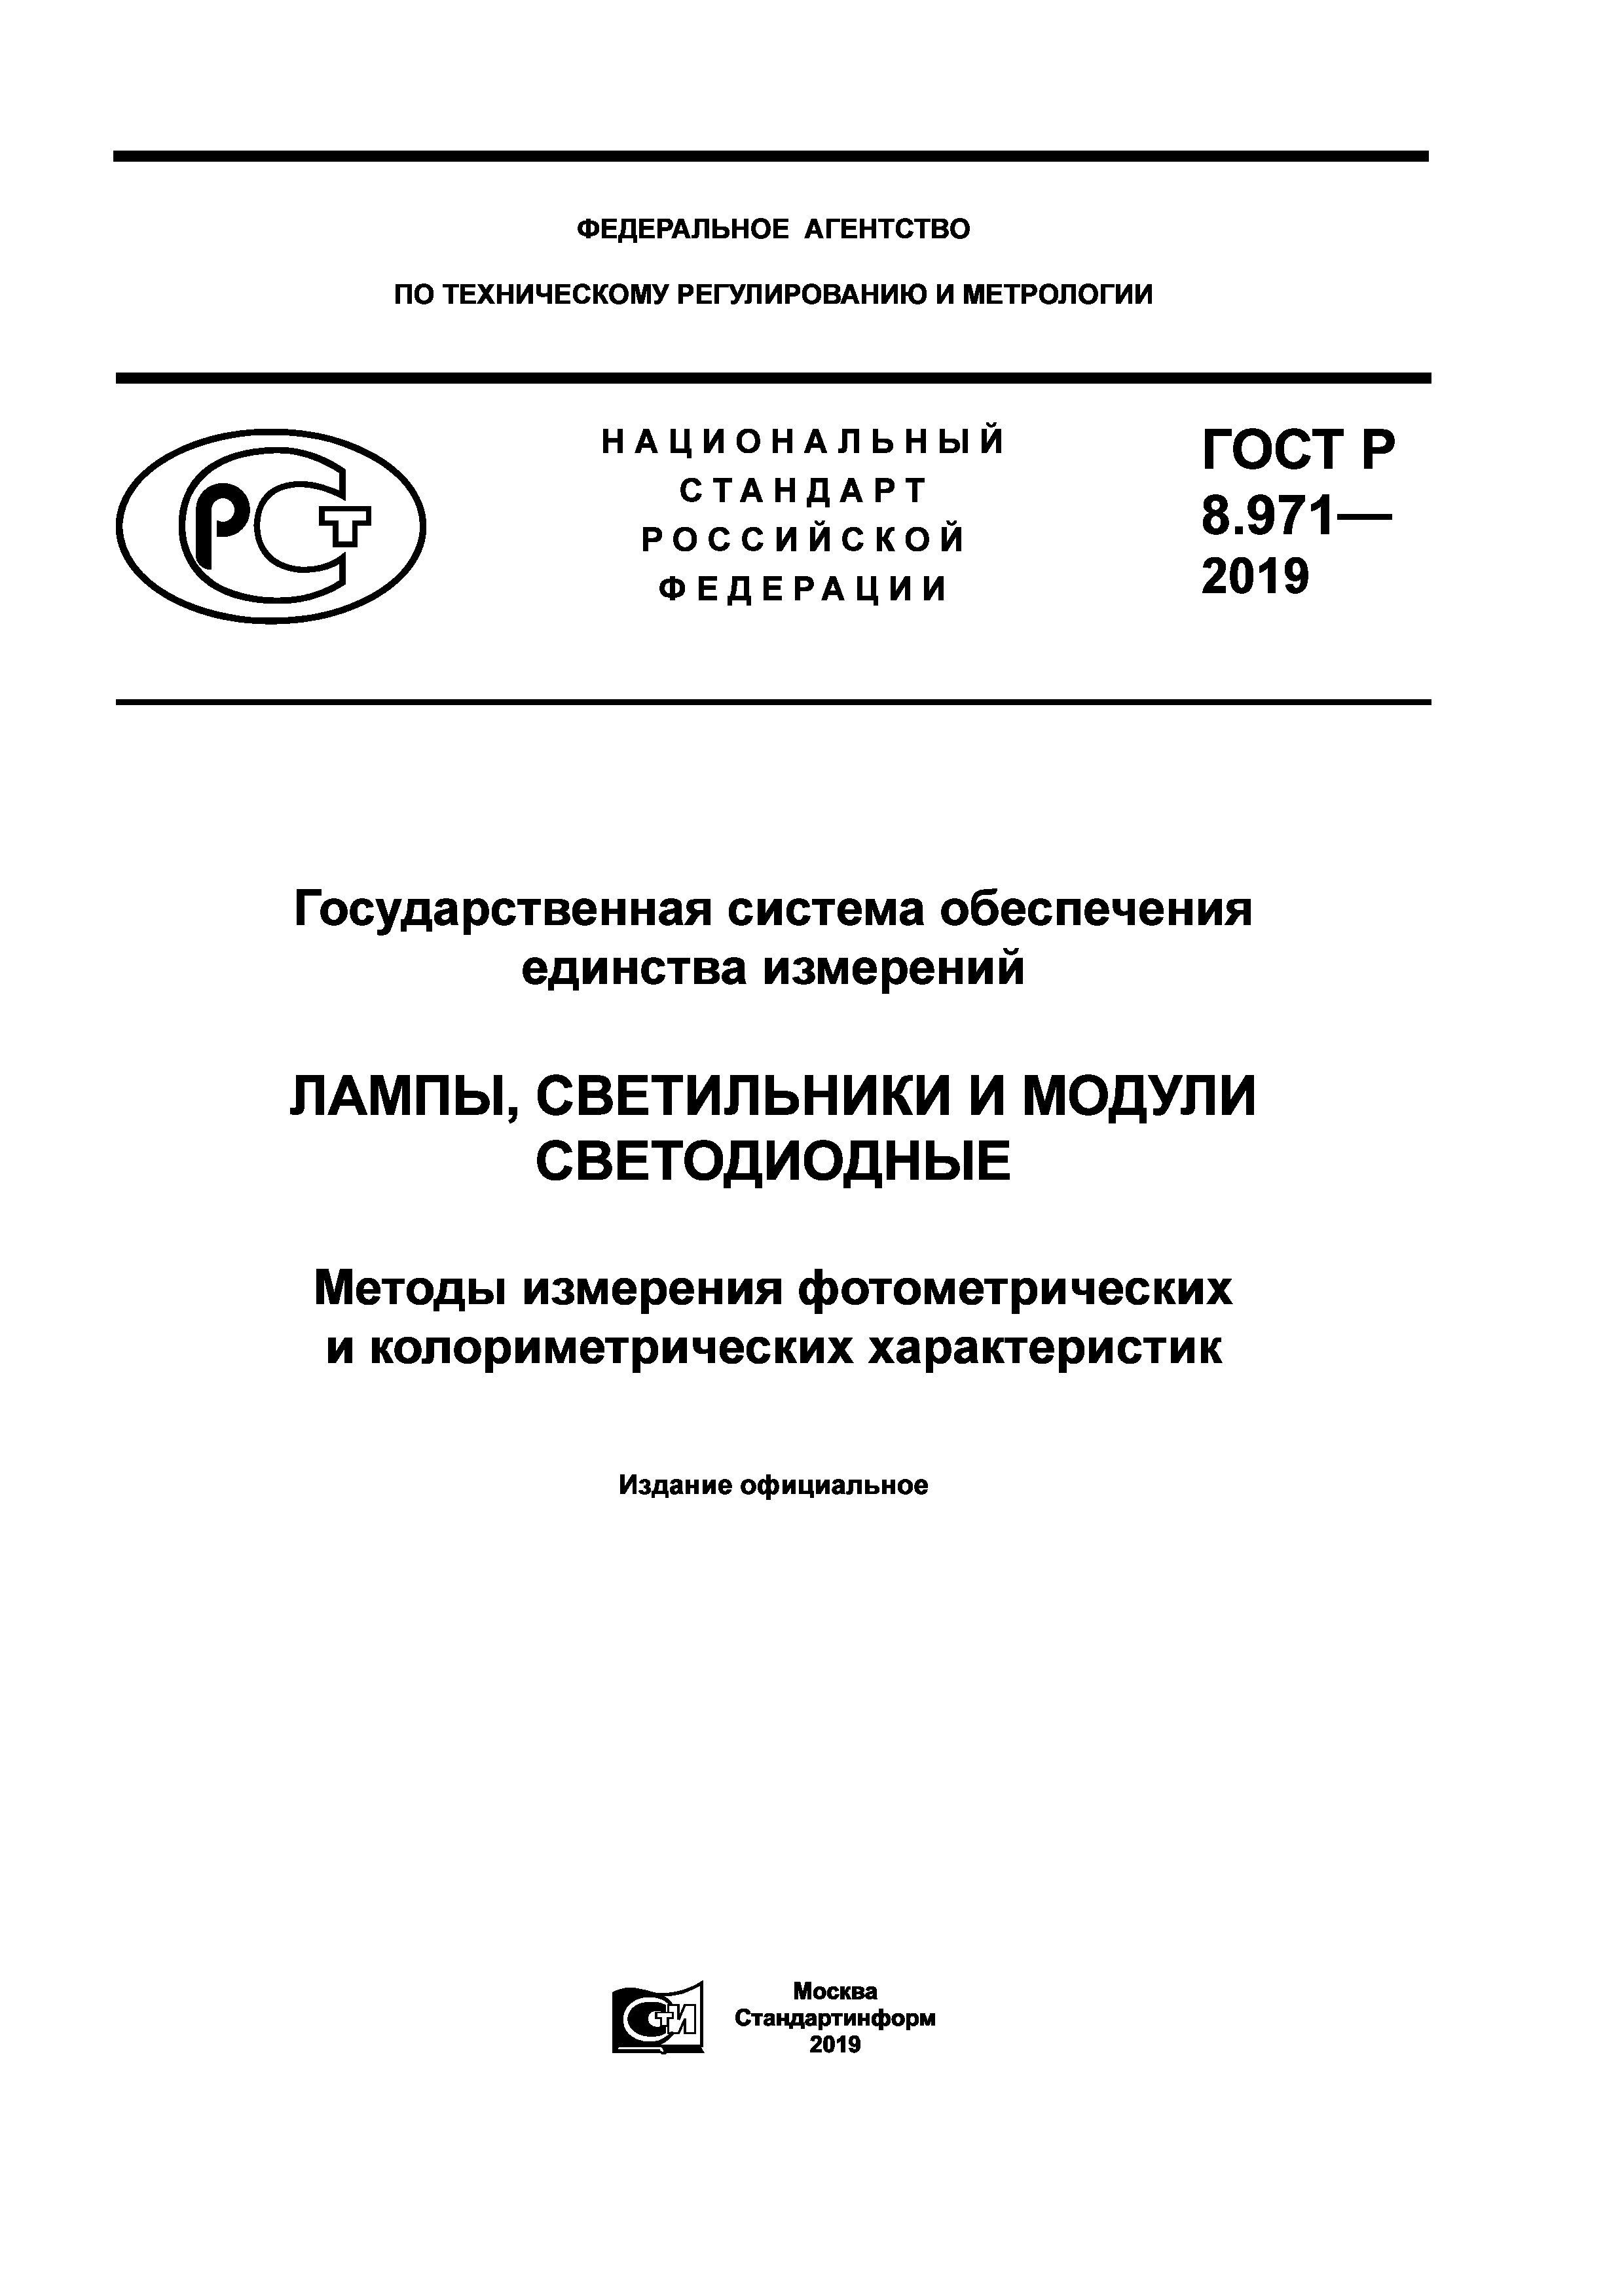 ГОСТ Р 8.971-2019